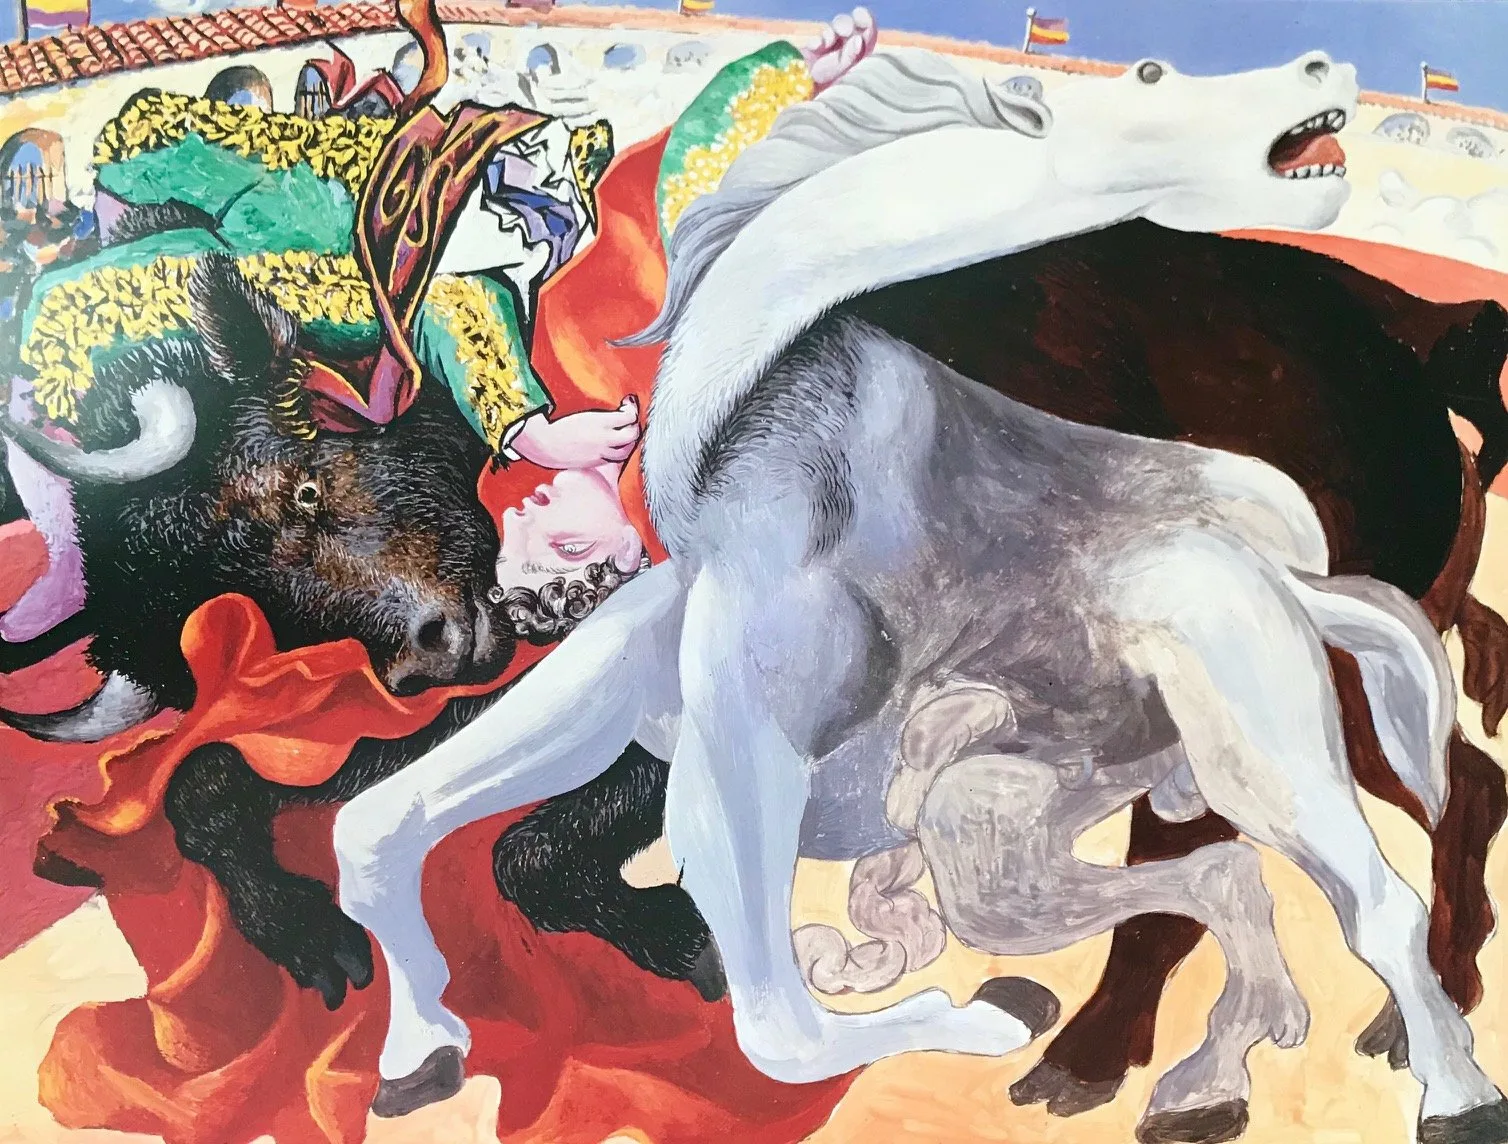 Picasso Poster "Corrida la mort du torero"